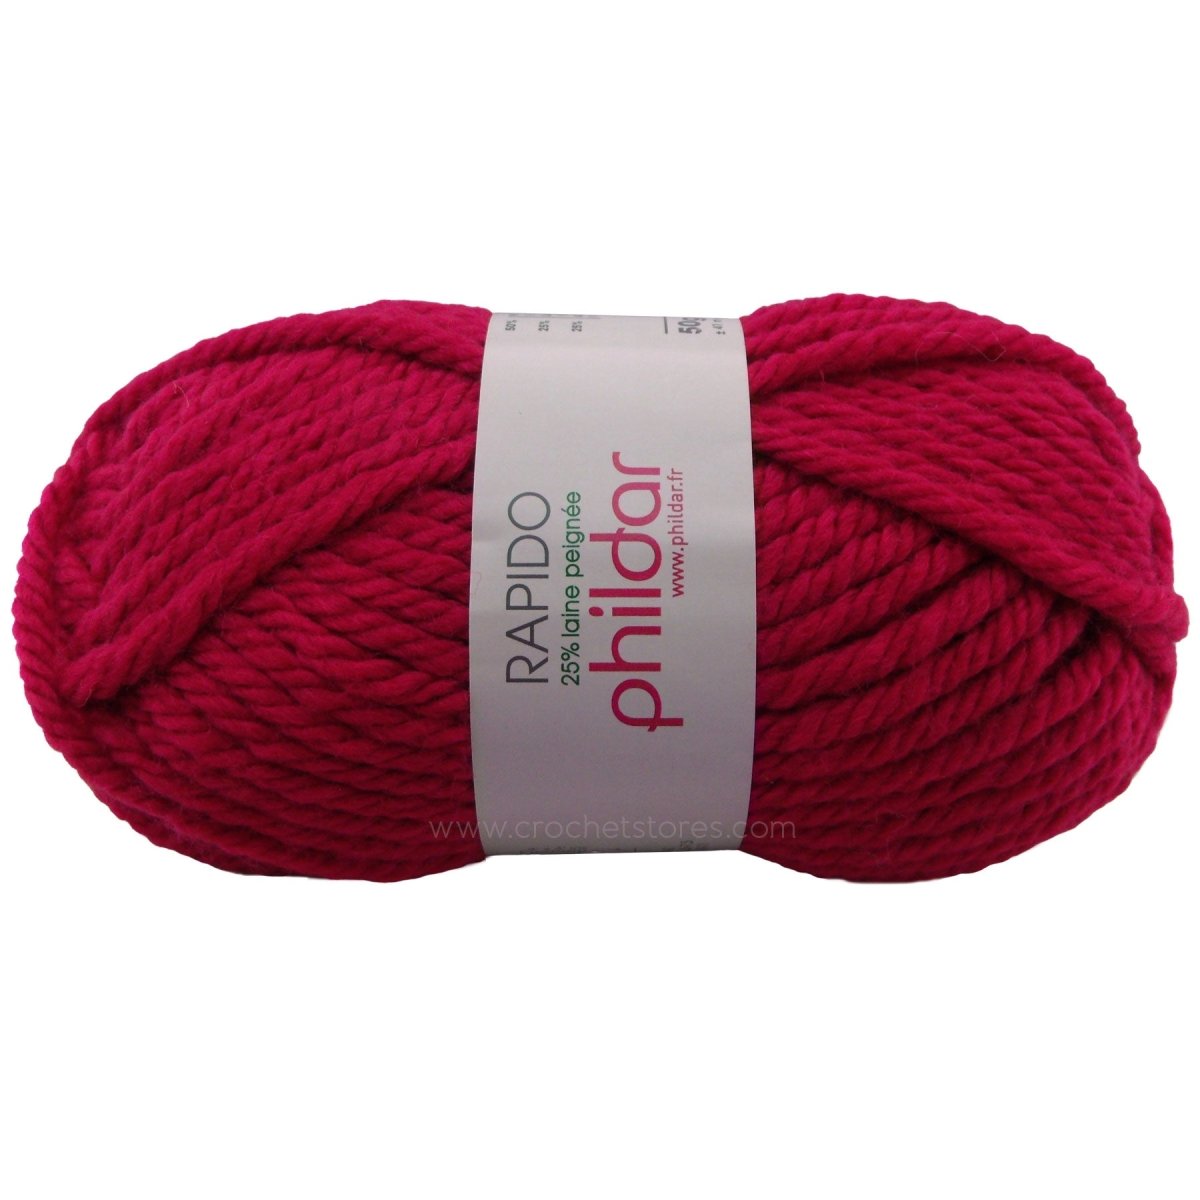 RAPIDO - Crochetstores500981-153307673607107